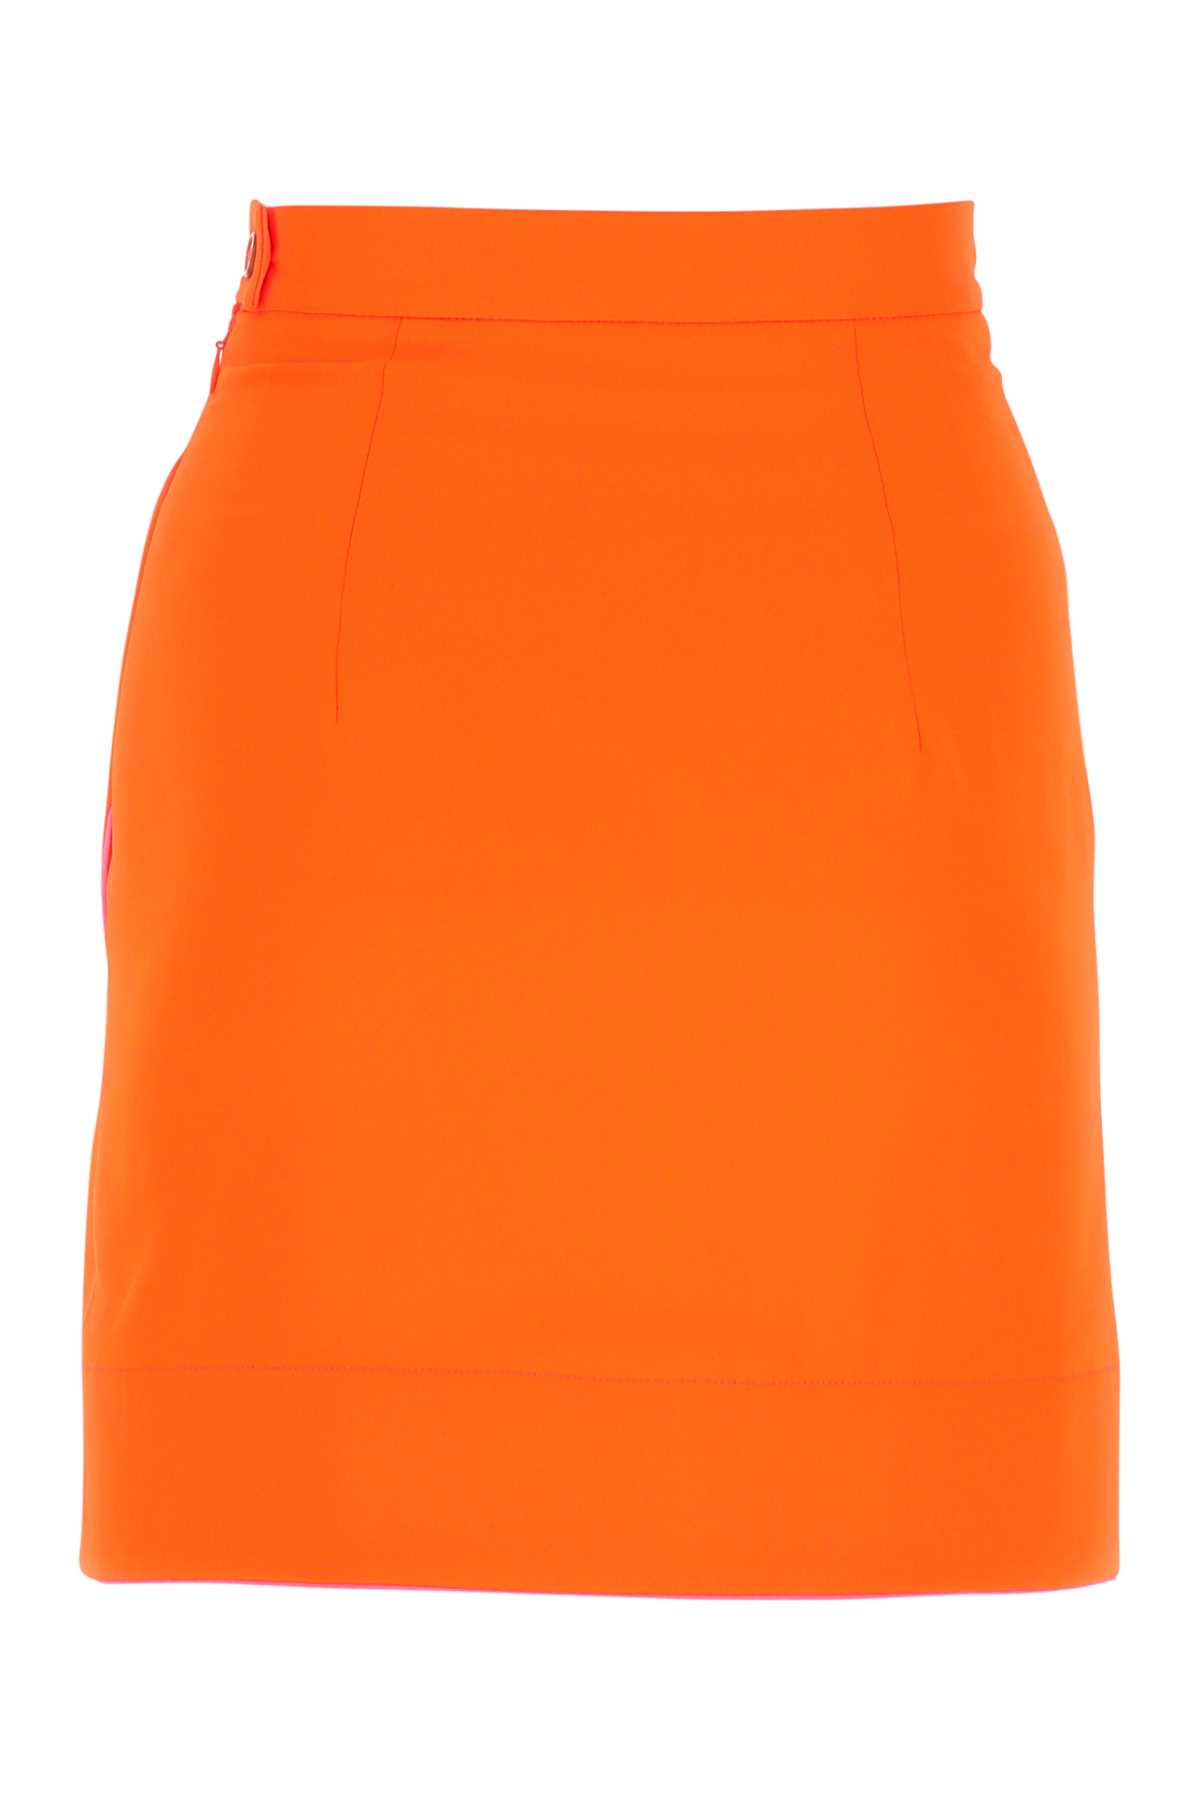 Vivienne Westwood Orange Polyester Mini Skirt In Neonorange